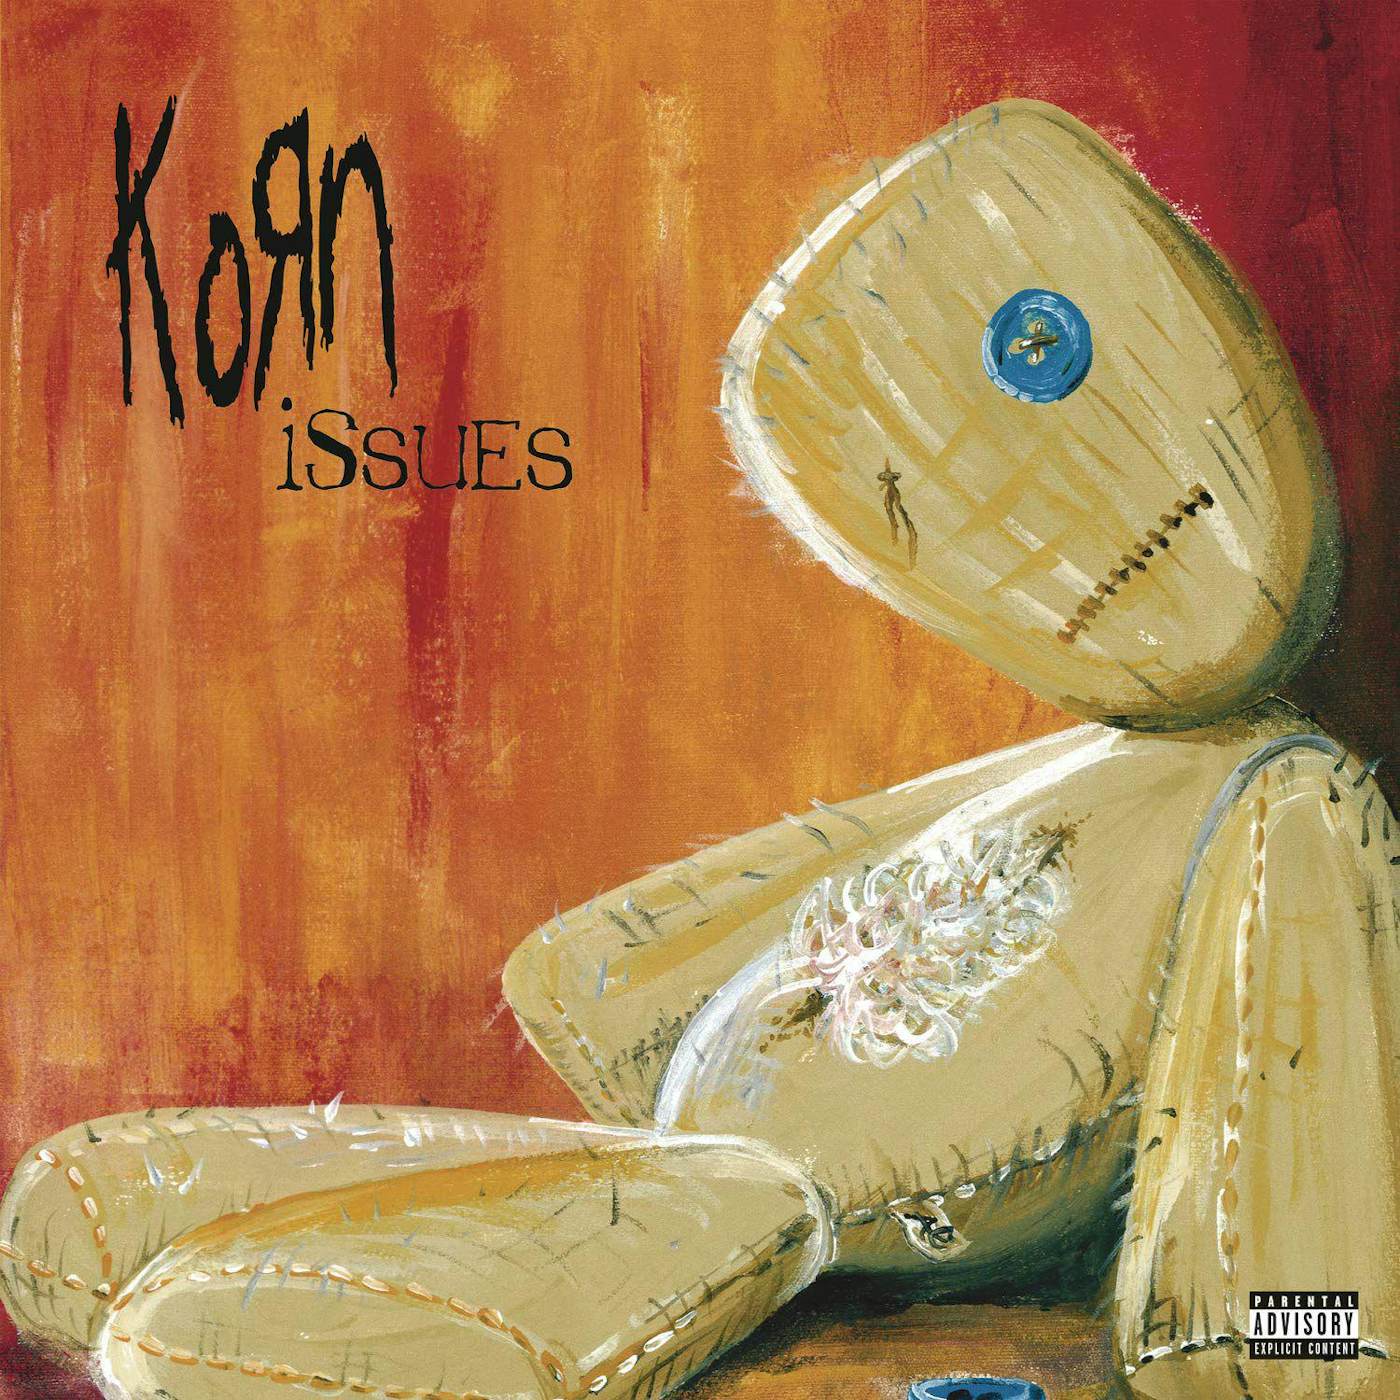 Korn Issues (X) (2lp/140g) Vinyl Record